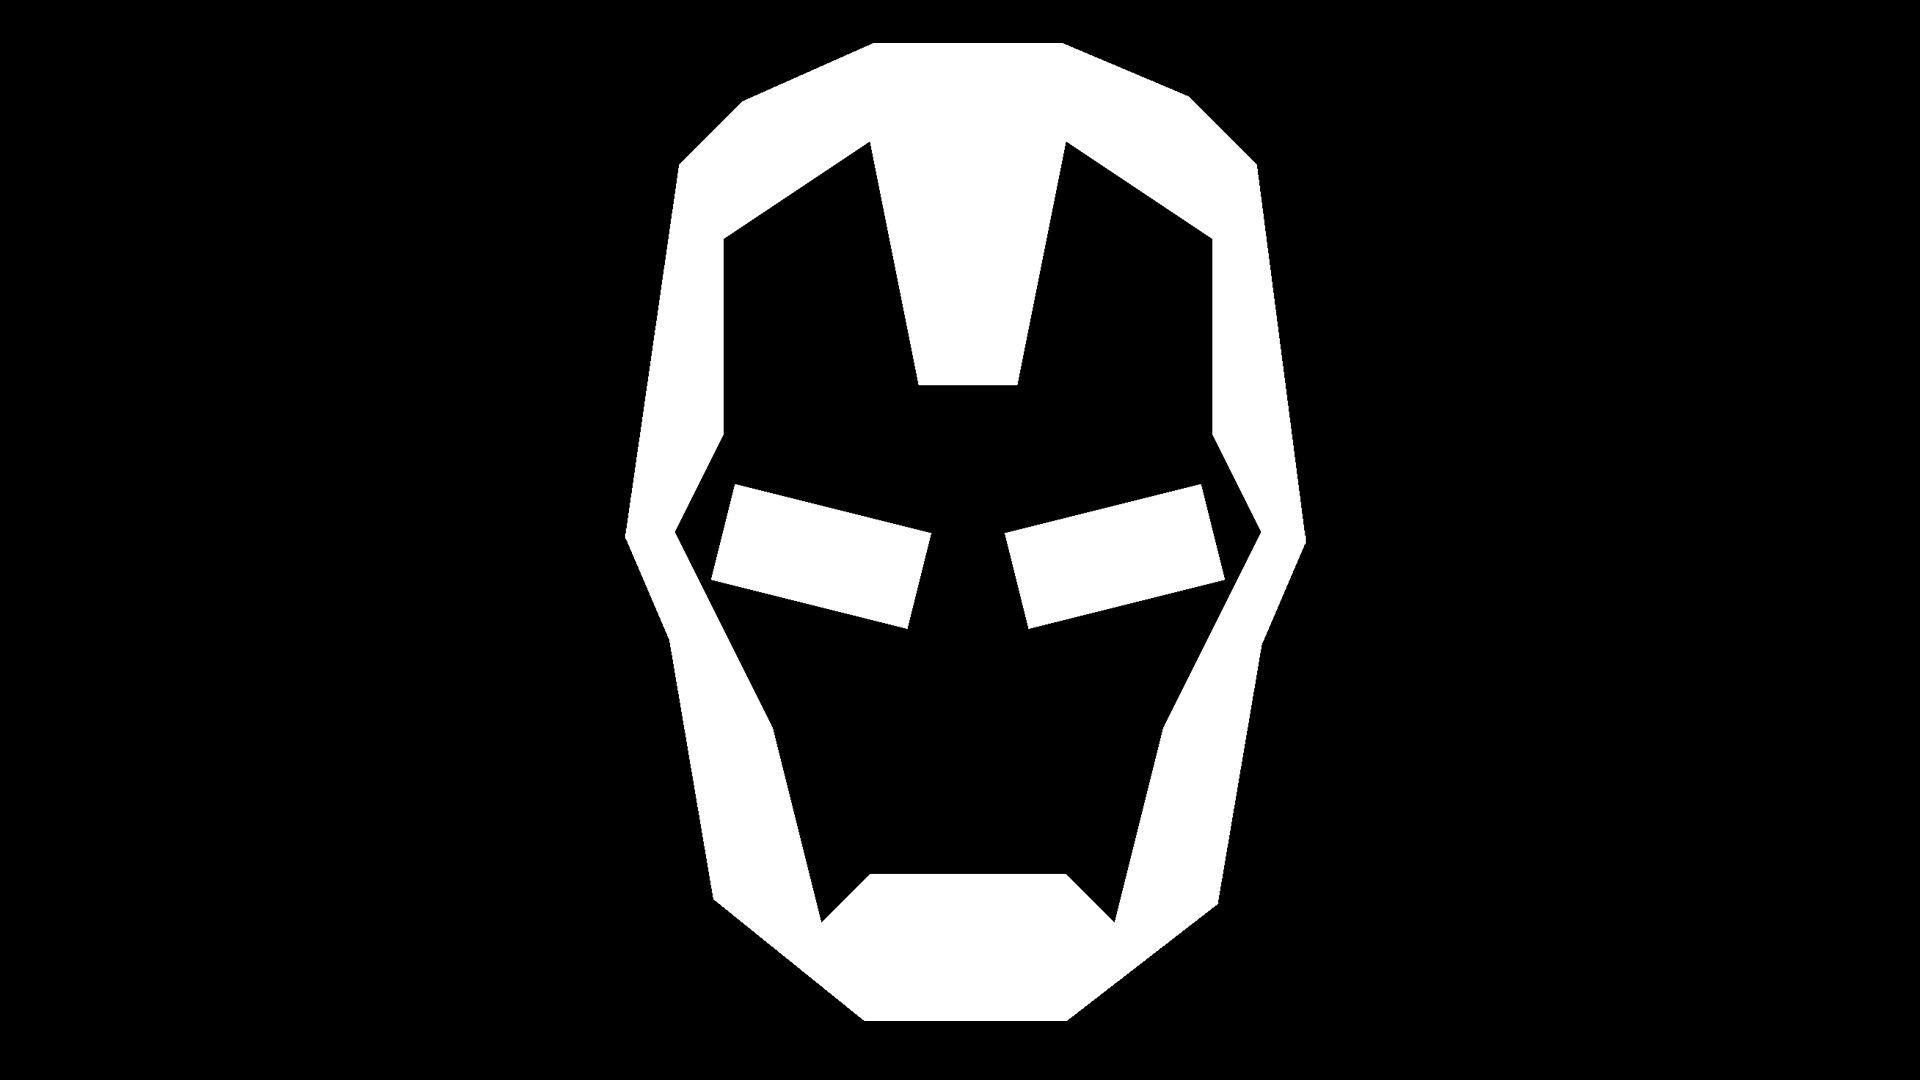 Iron Man Black and White Logo - Iron Man Logo, Iron Man Symbol, Meaning, History and Evolution